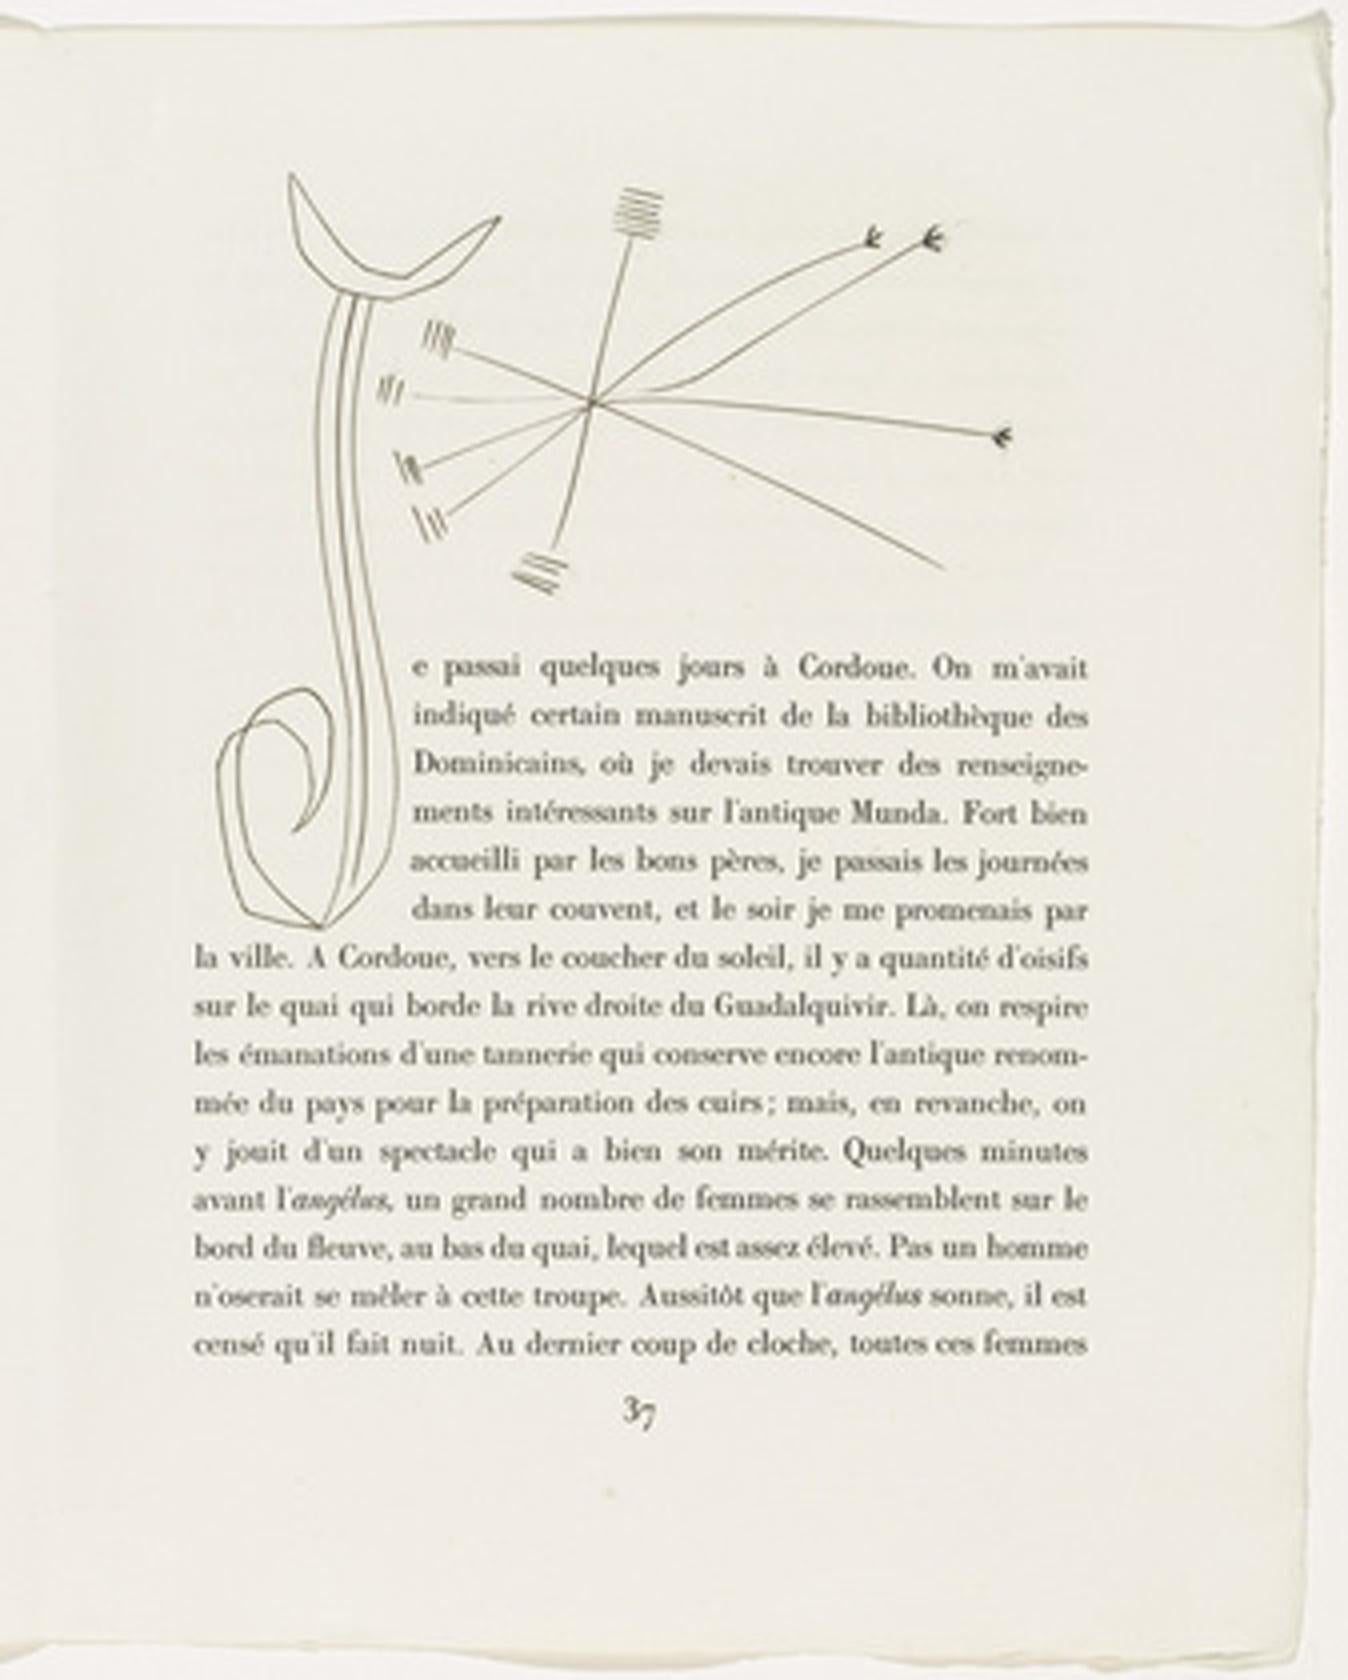 Carmen Monogram "J" with Design (Plate VII)